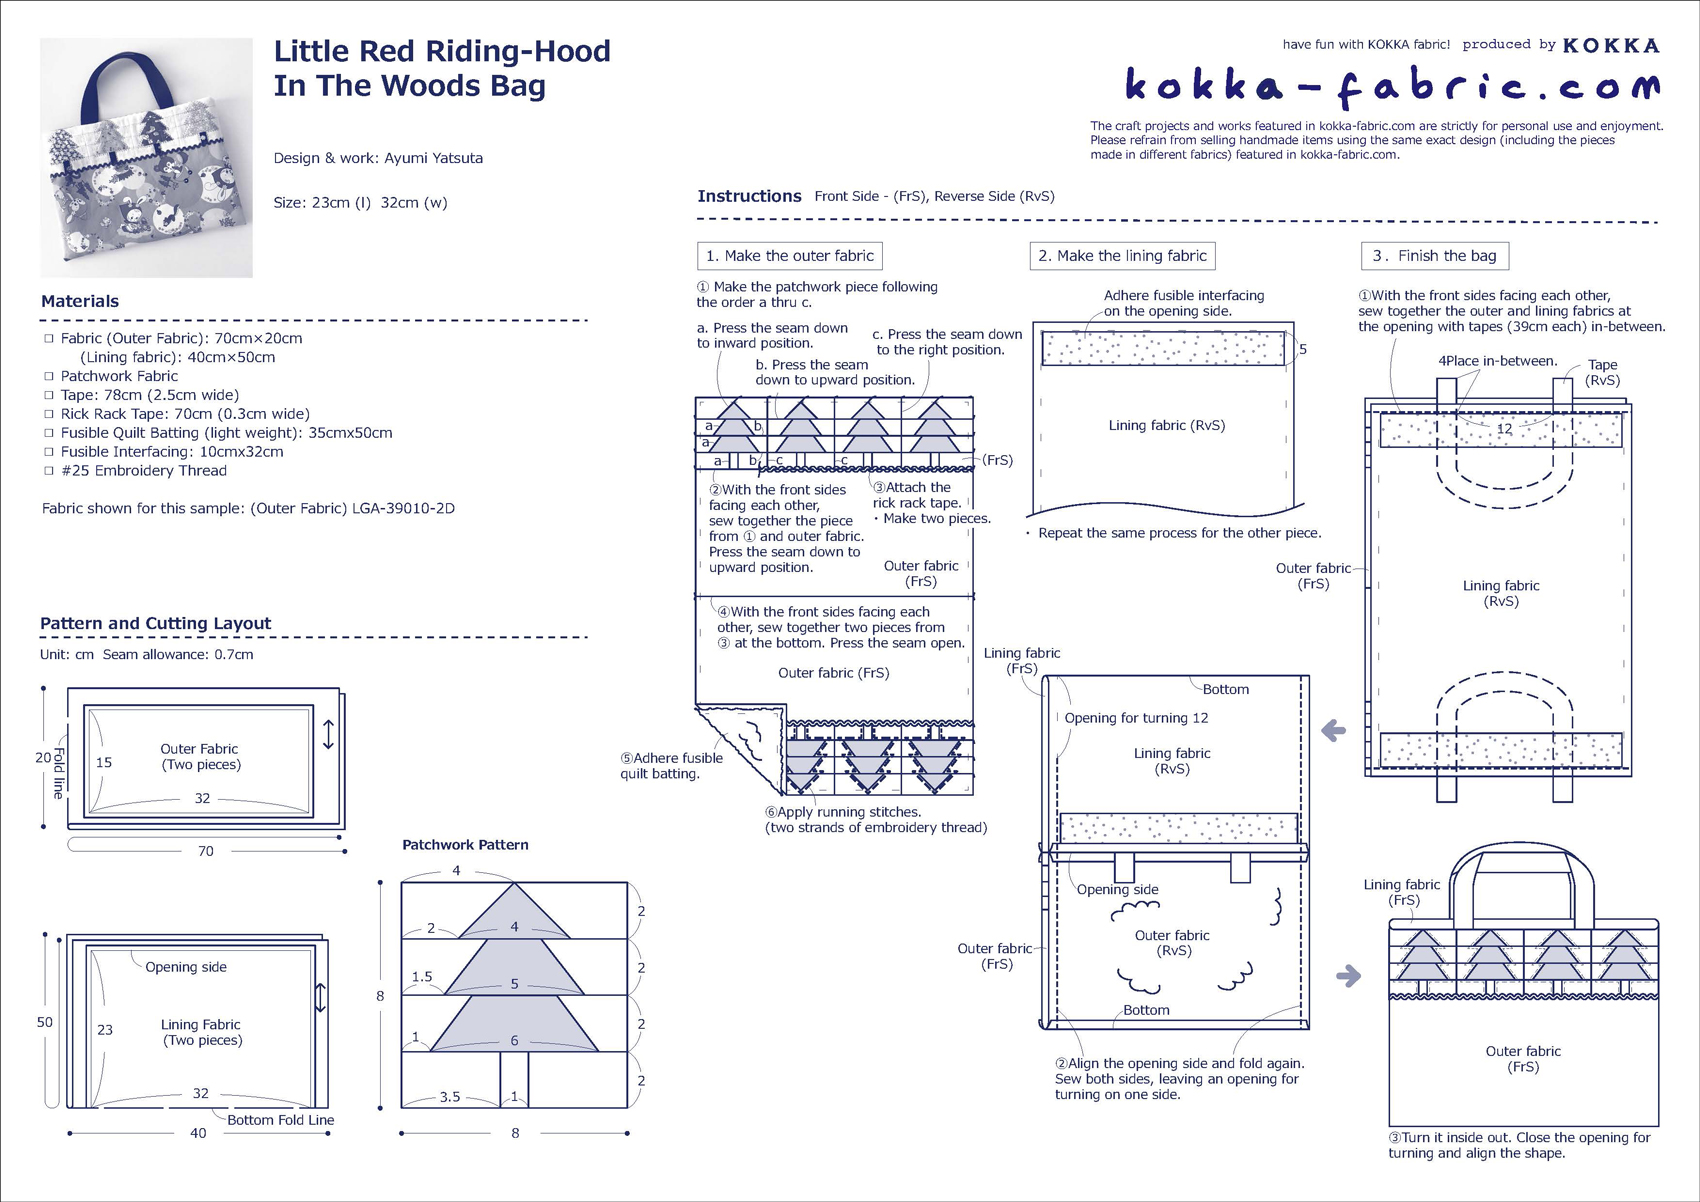 Little Red Riding Hood Bag – Sewing Instructions | KOKKA-FABRIC.COM ...